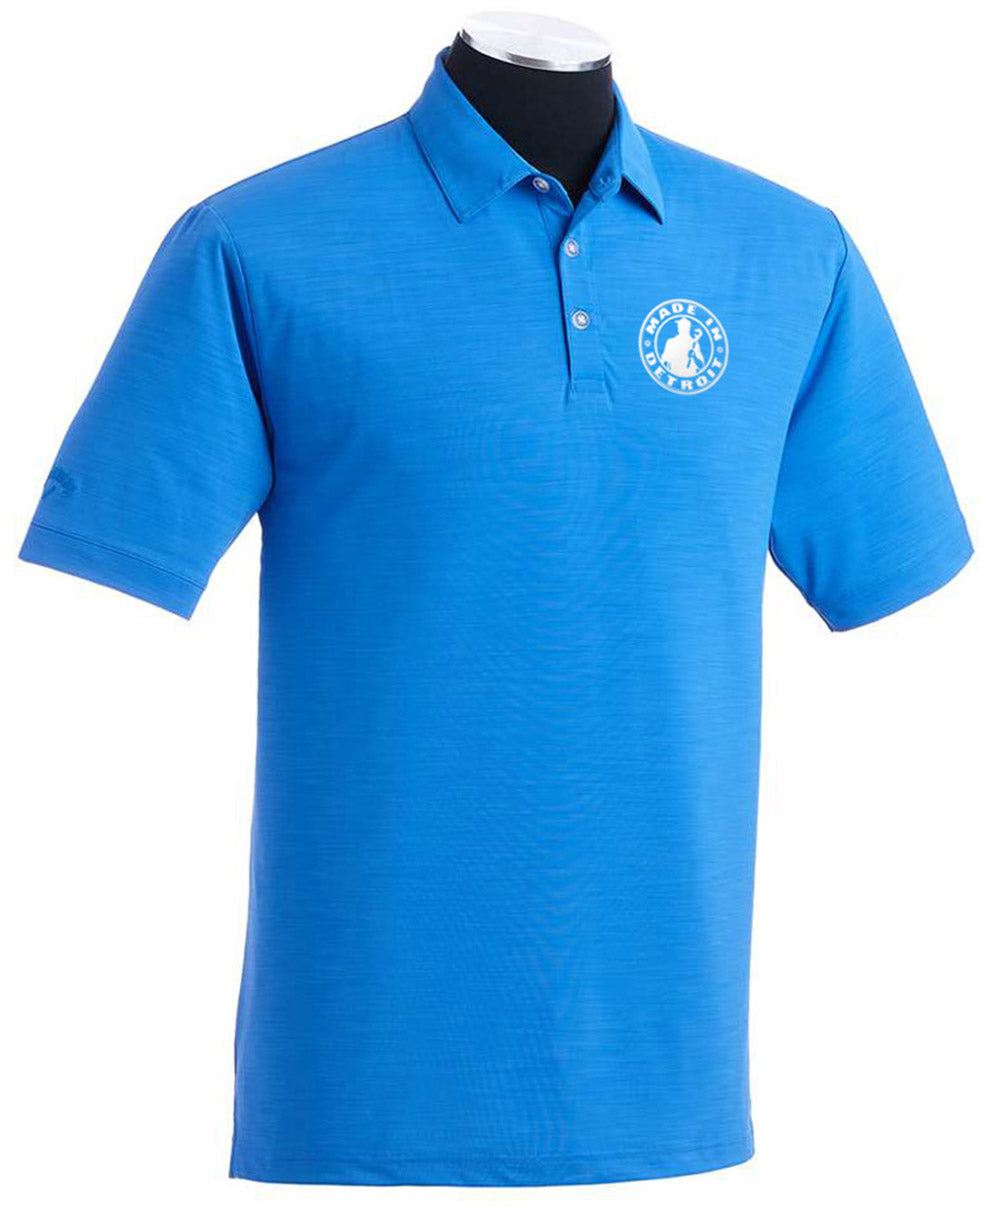 PING Jay Golf Polo Shirt - Blue / Danube - Andrew Morris Golf